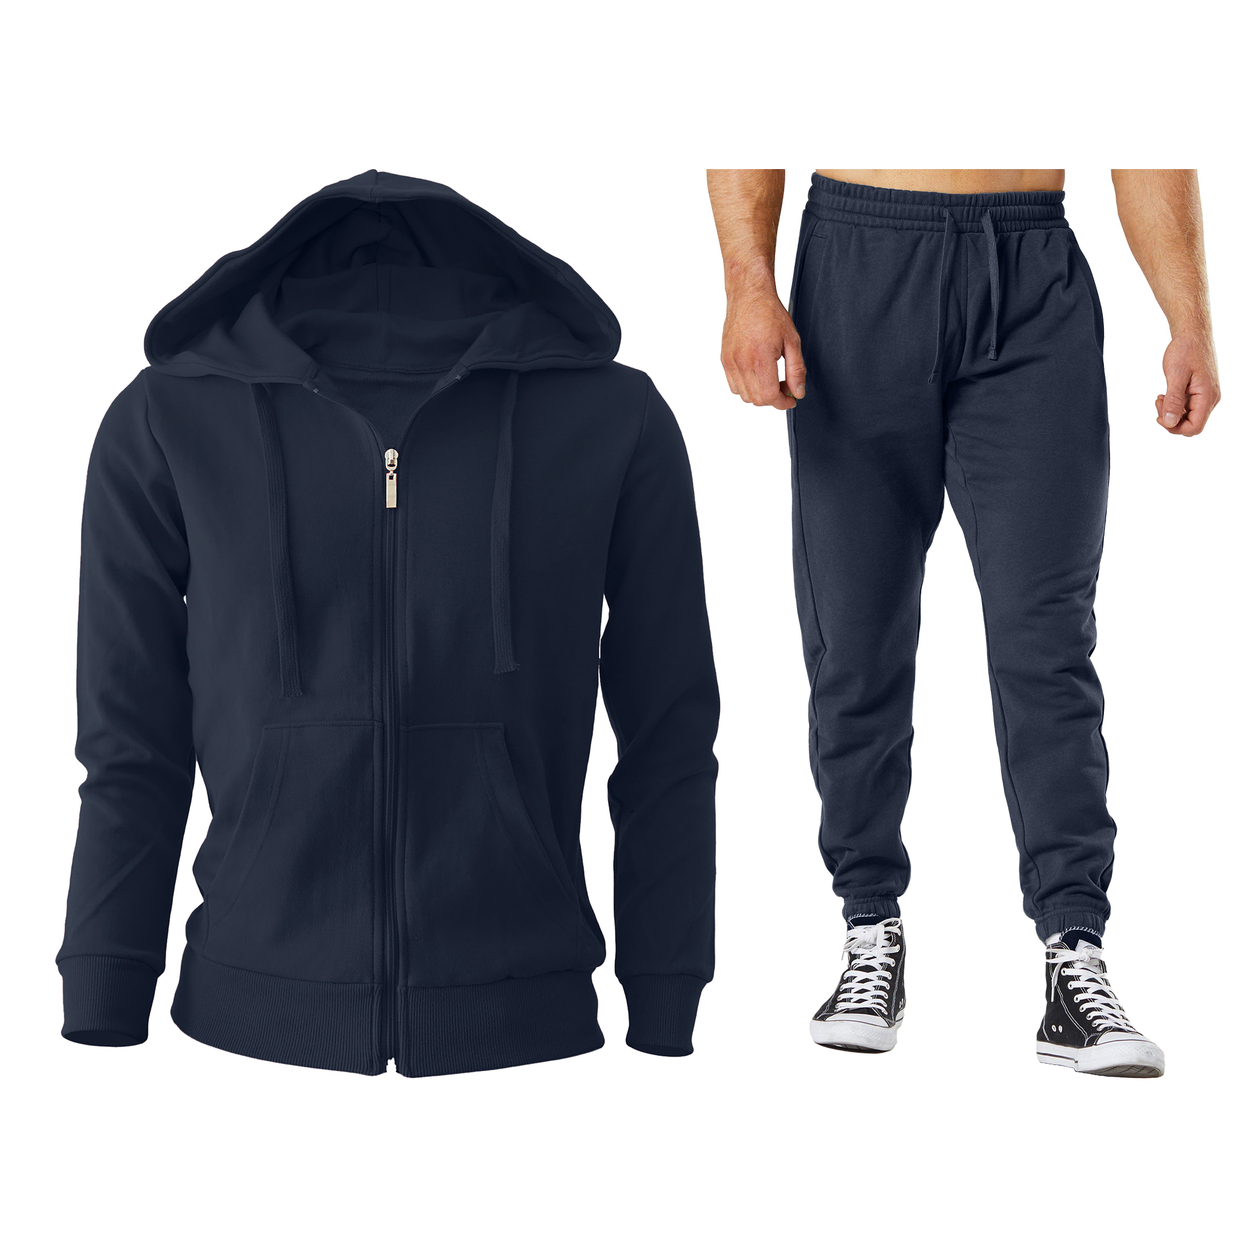 2/4-Piece: Men's Winter Warm Cozy Athletic Multi-Pockets BIG & TALL Sweatsuit Set - Navy, 2, Medium